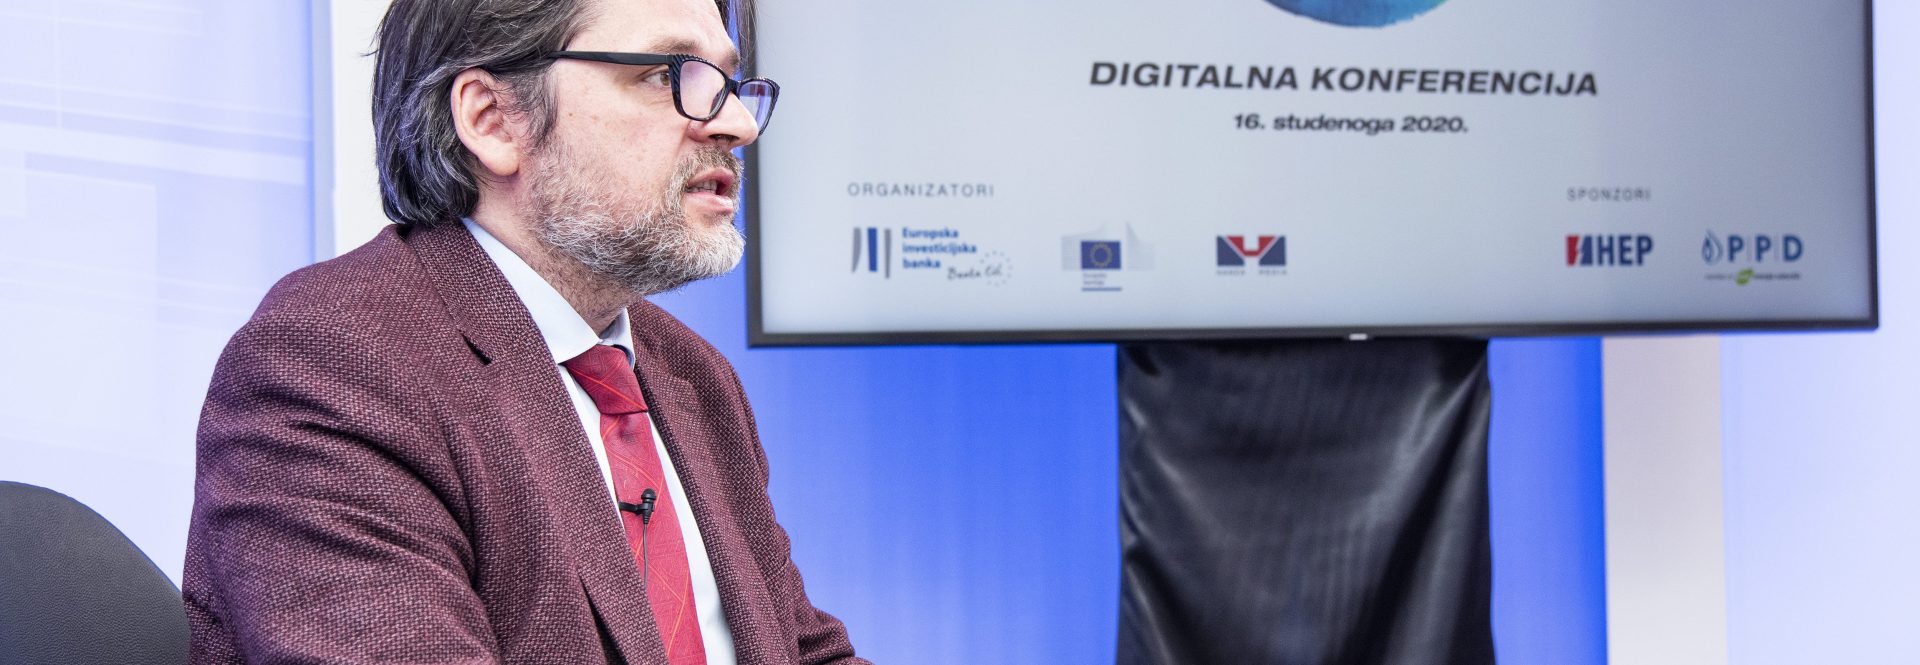 Digitalna konferencija, Europski plan oporavka